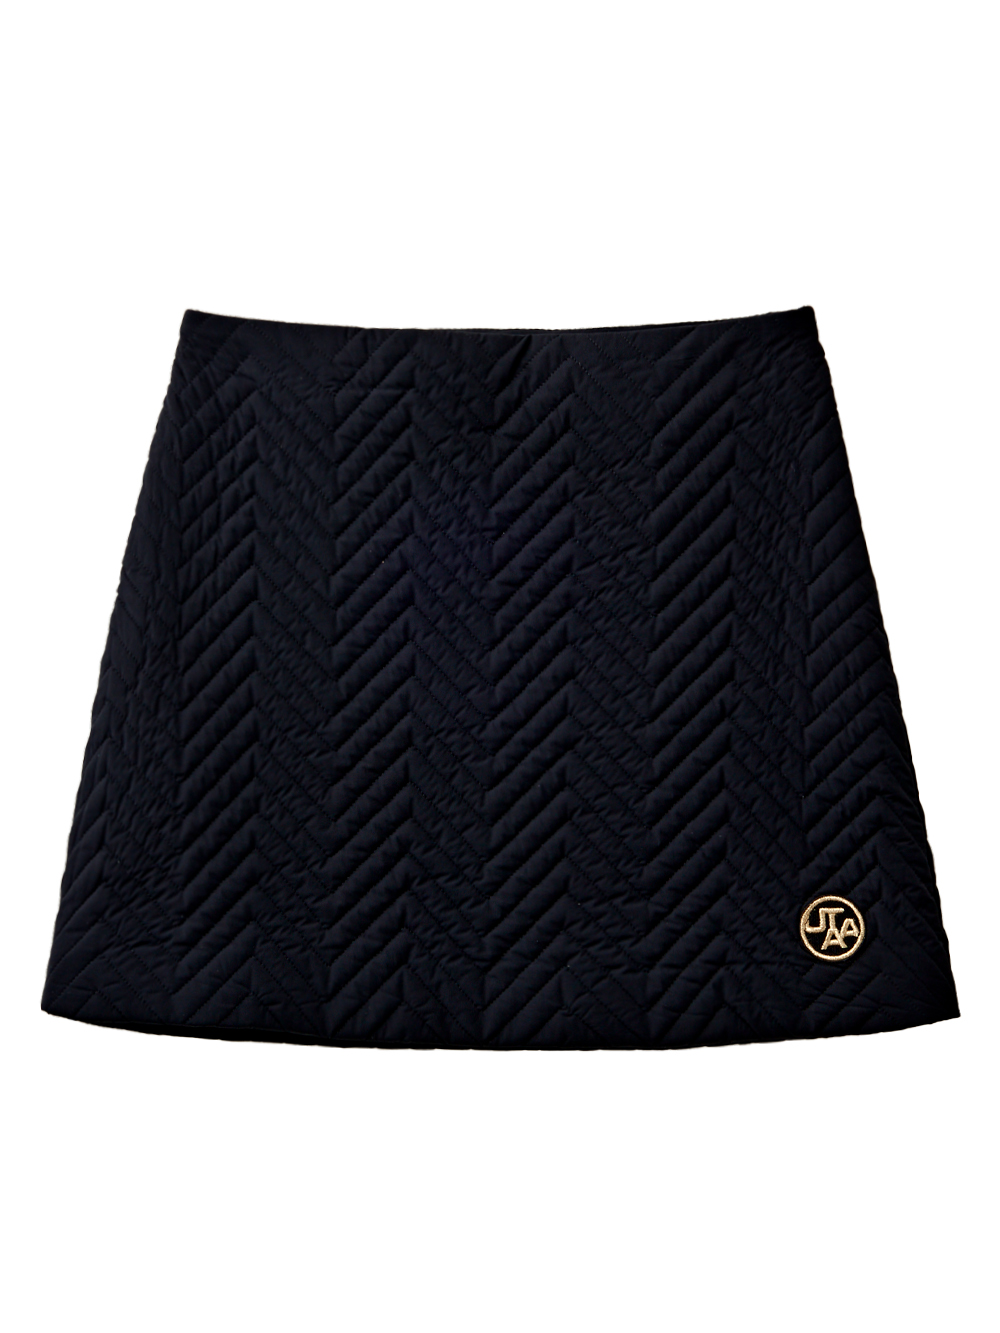 UTAA Golden Scales Quilting Padding Skirt  : Black(UD1SKF593BK)